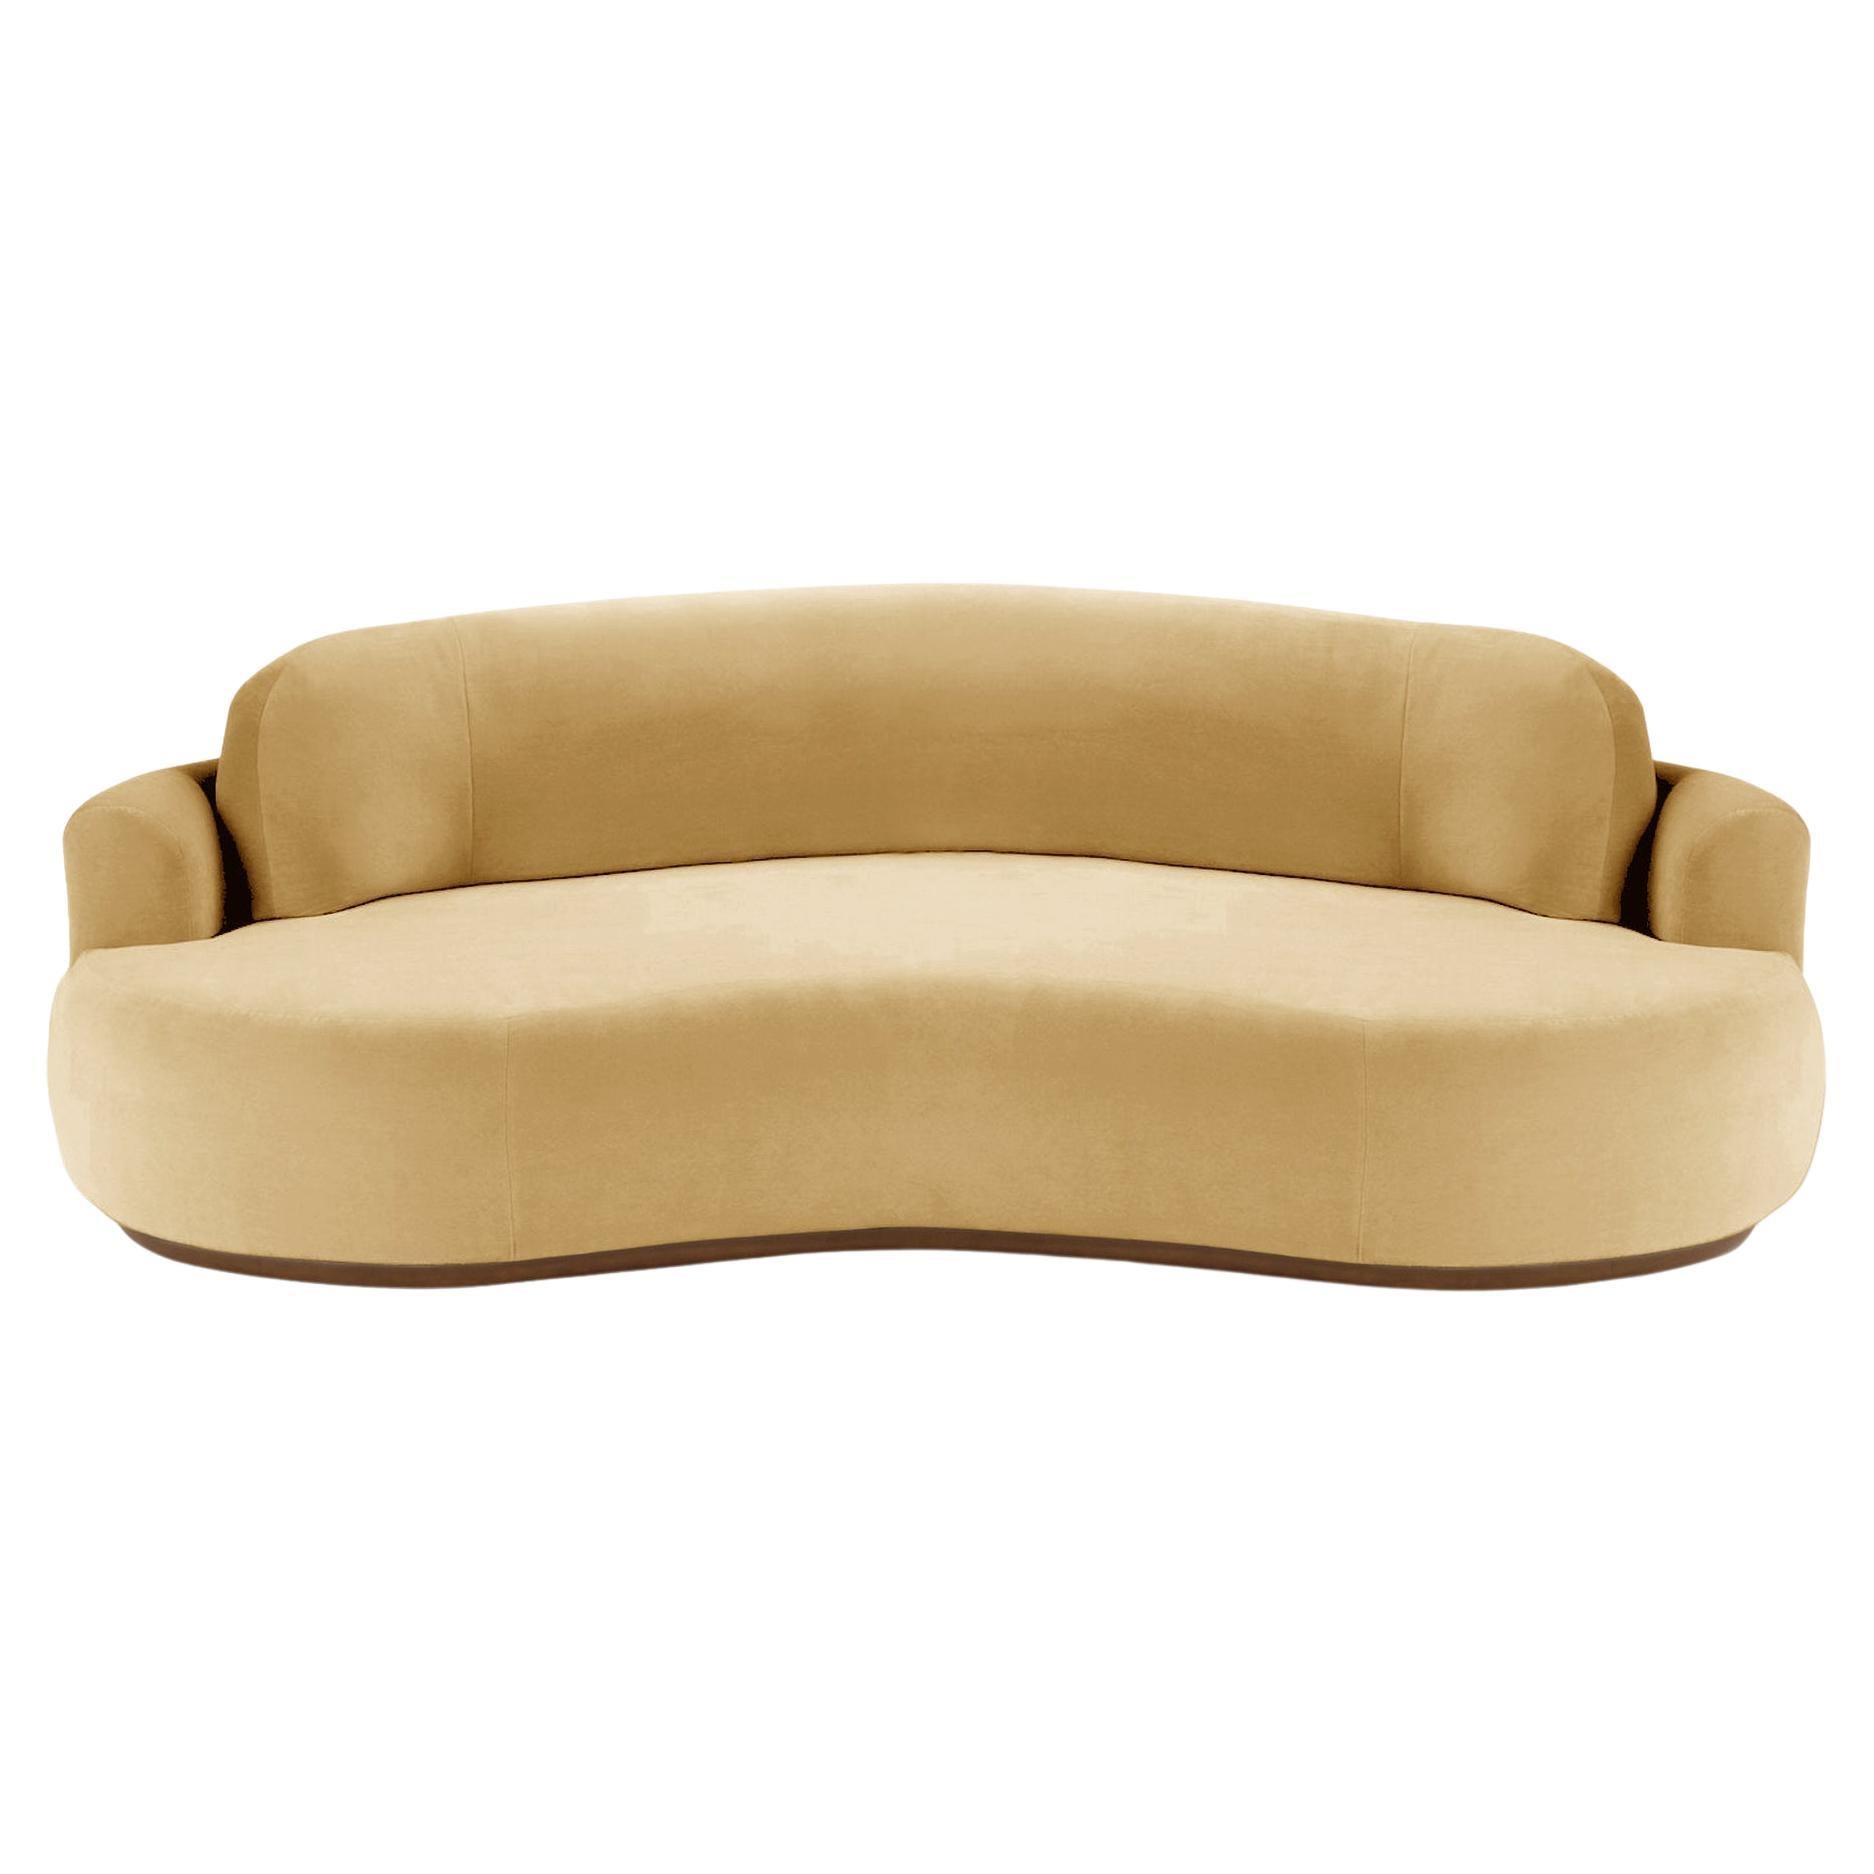 Naked Round Sofa, Medium with Beech Ash-056-1 and Vigo Plantain For Sale